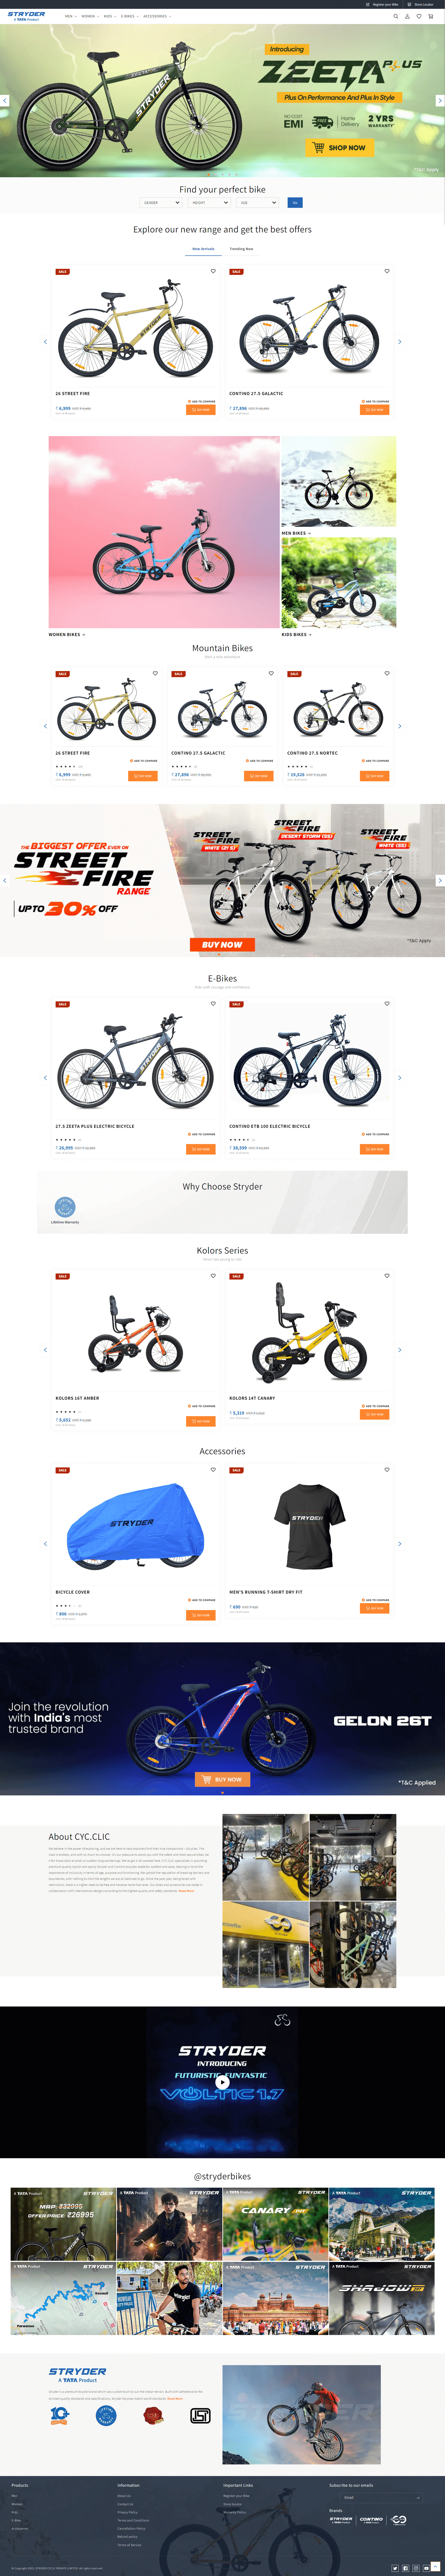 stryderbikes website screenshot